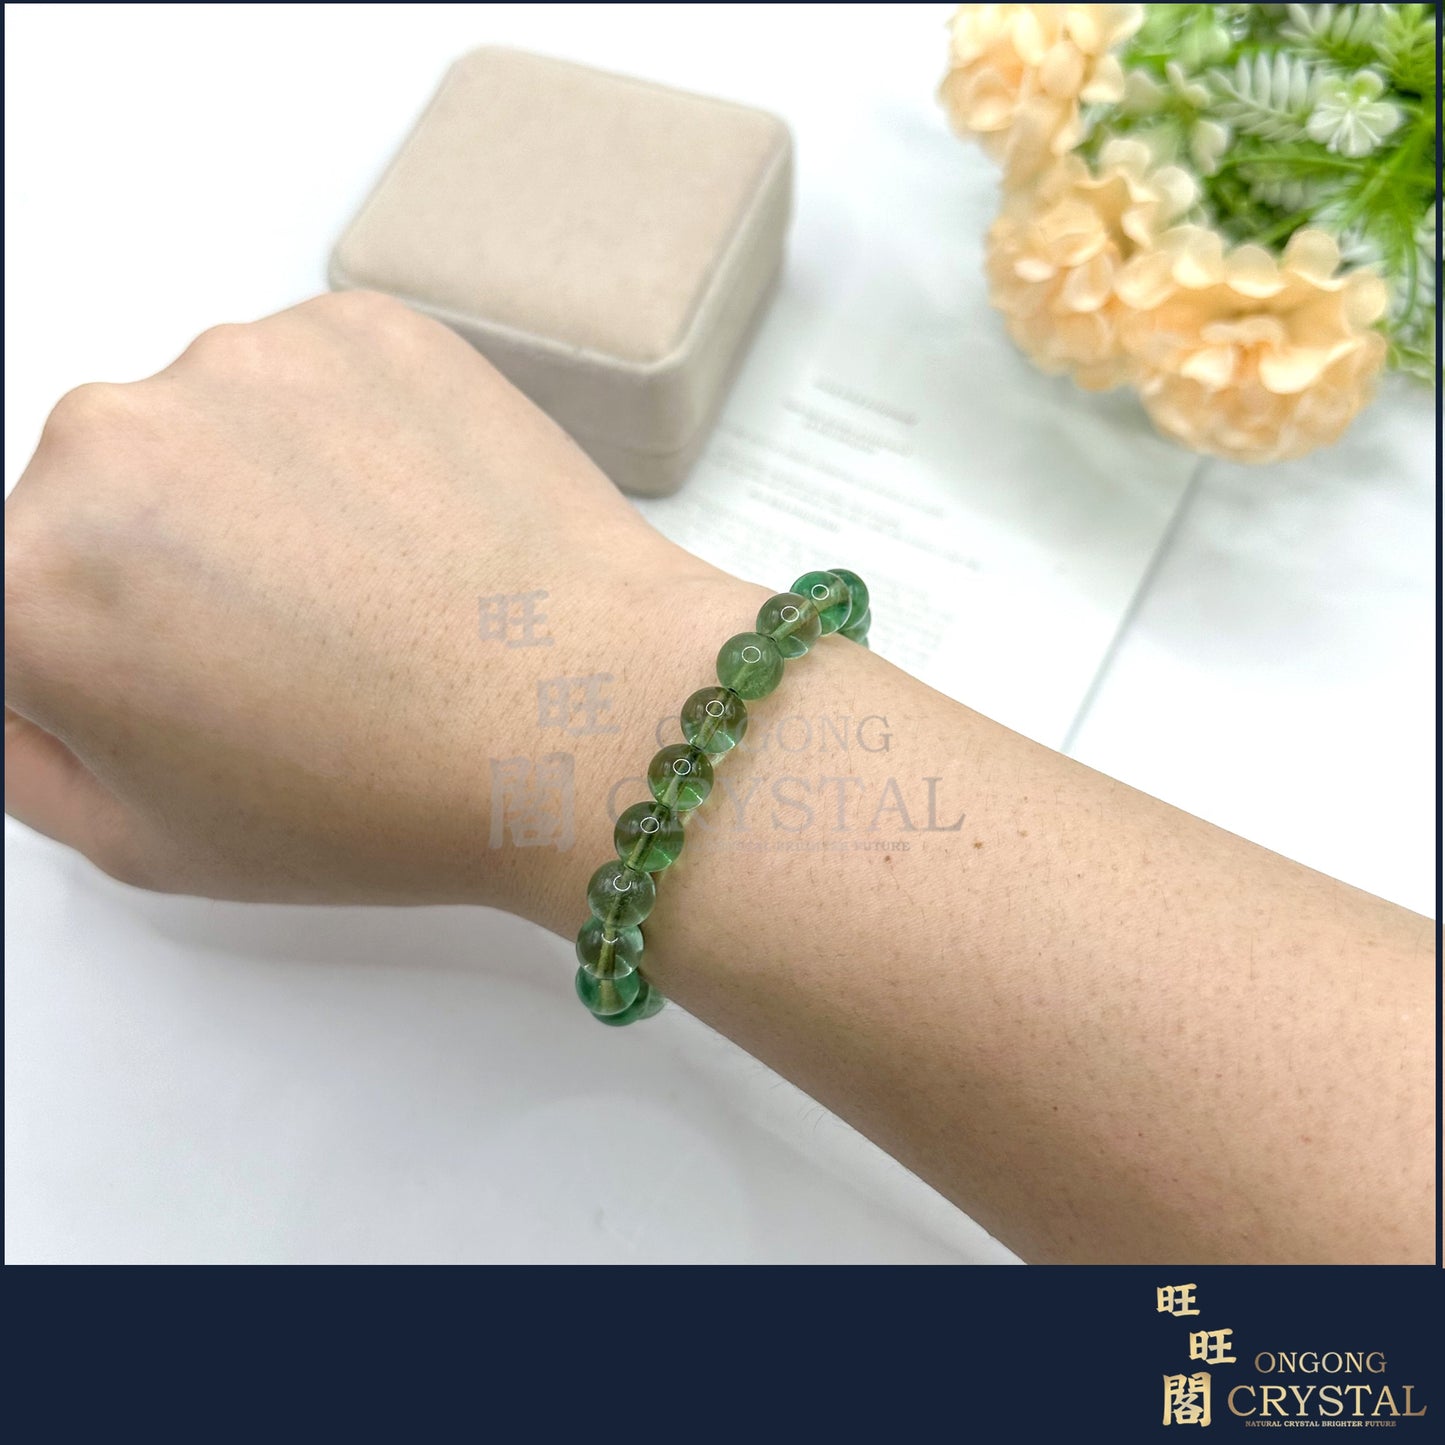 天然绿萤石手串 Natural Green Fluorite Bracelet 8MM